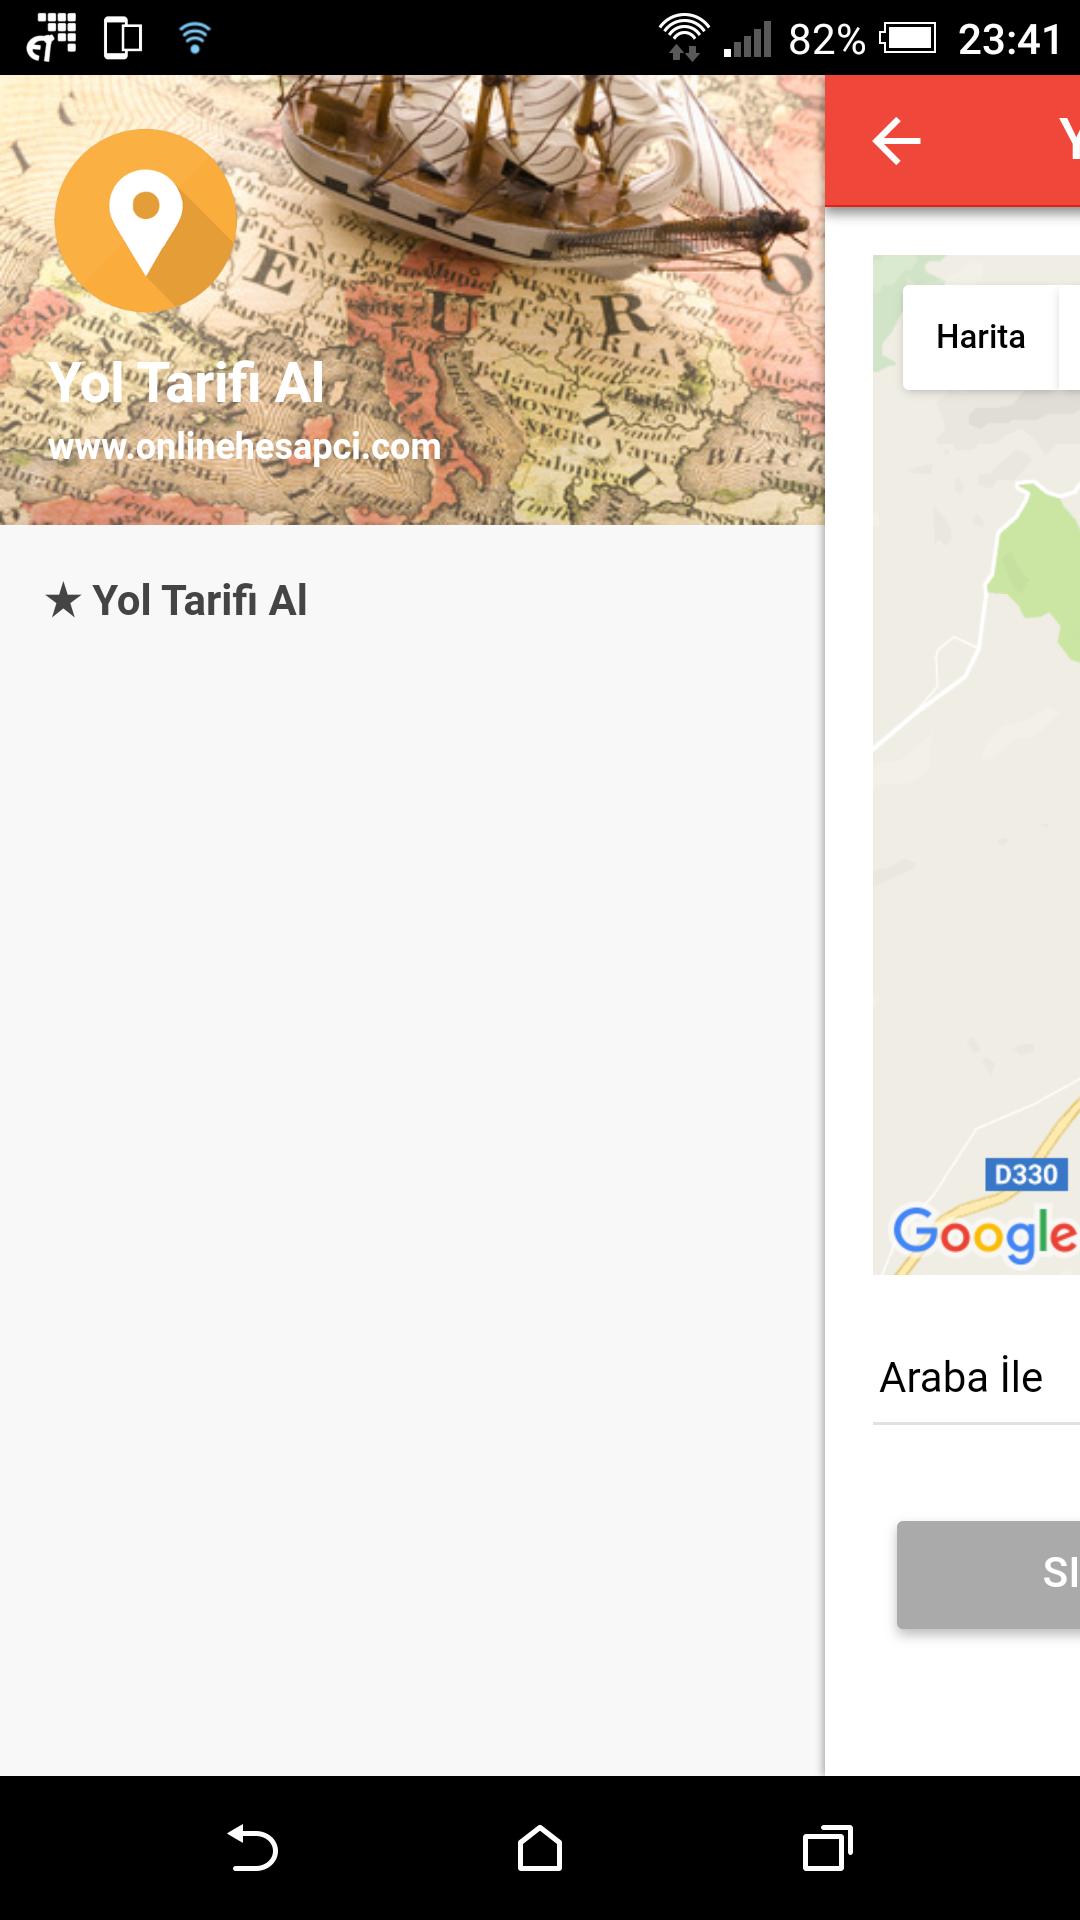 Yol Tarifi Al Navigasyon For Android Apk Download